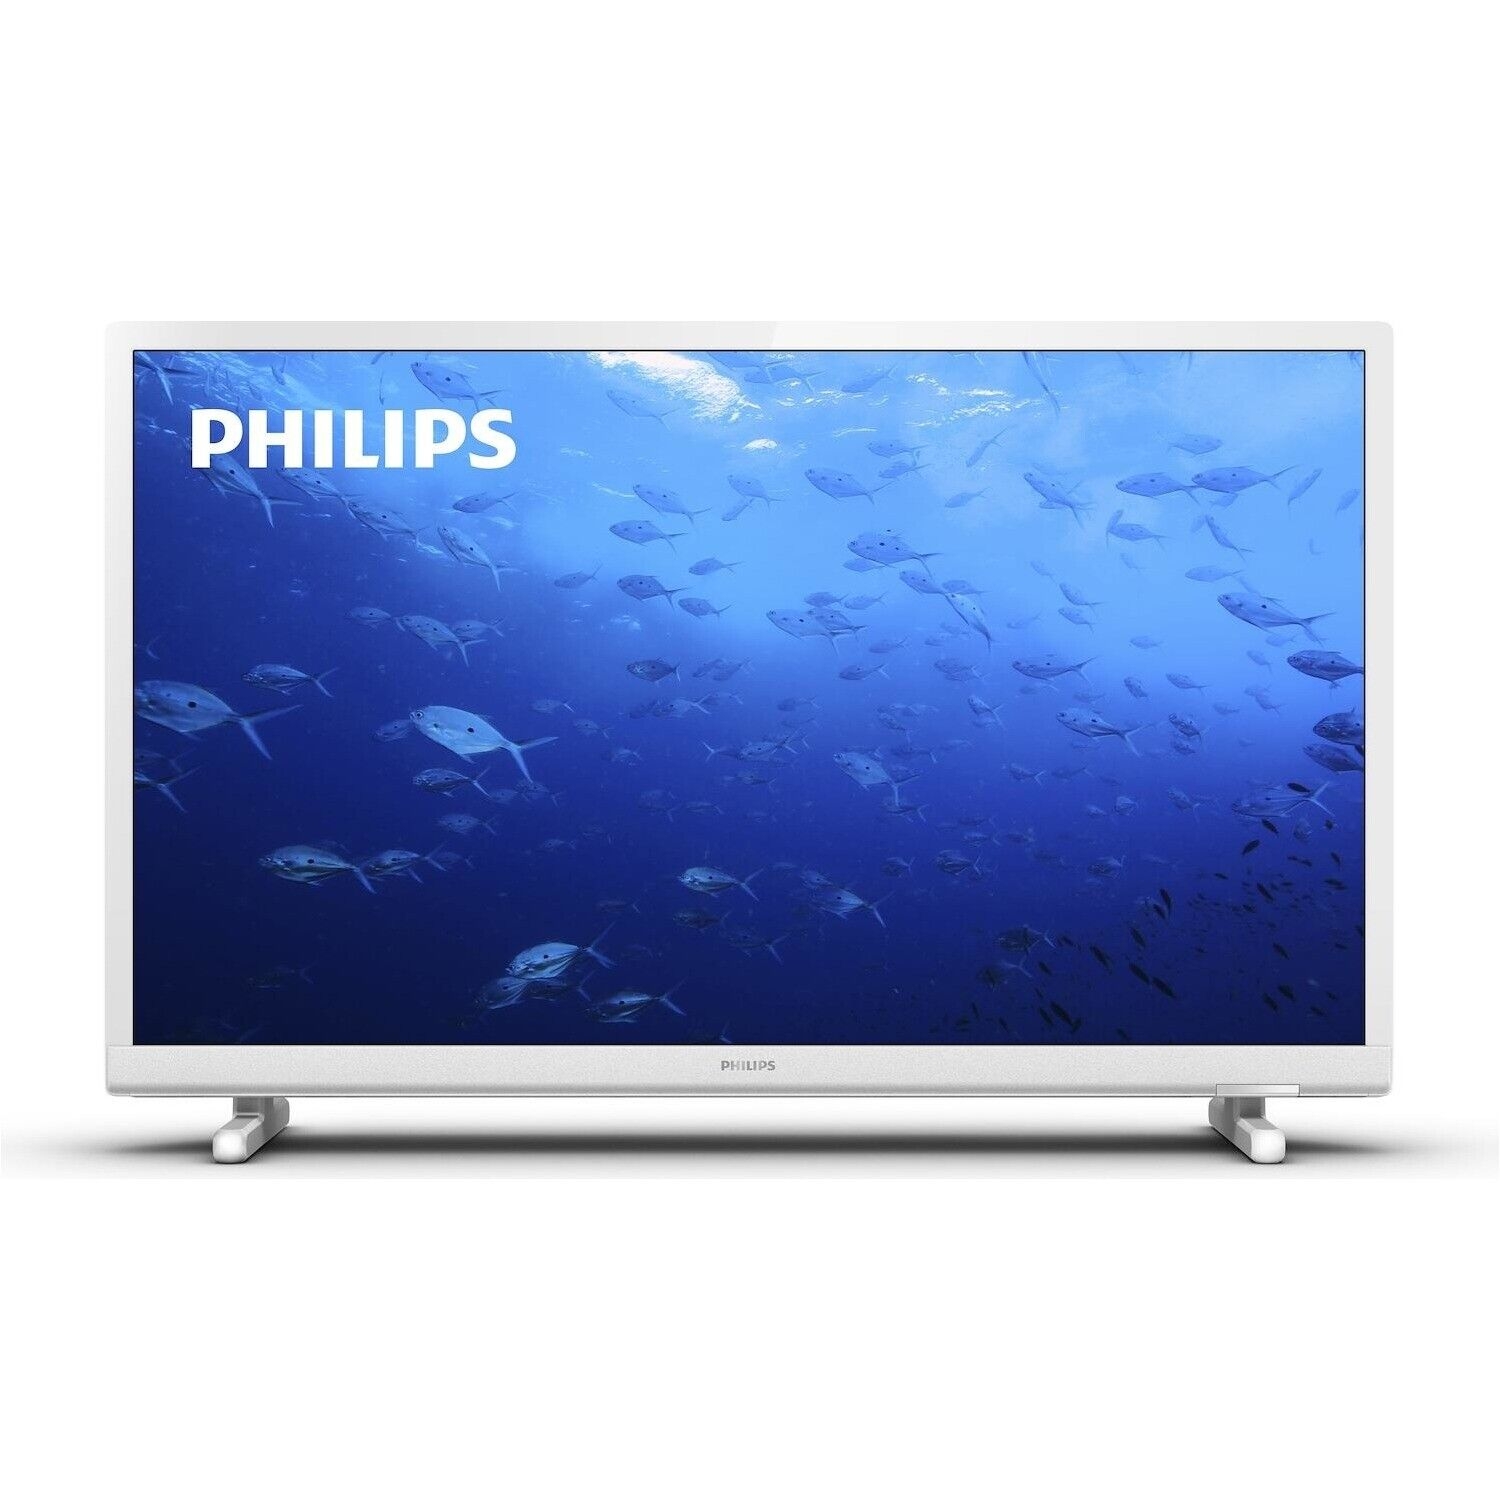 Philips 24phs5537/12 Led Tv 24 Pollici Hd-ready Pixel Plus Triplo Tuner Hd Eek: